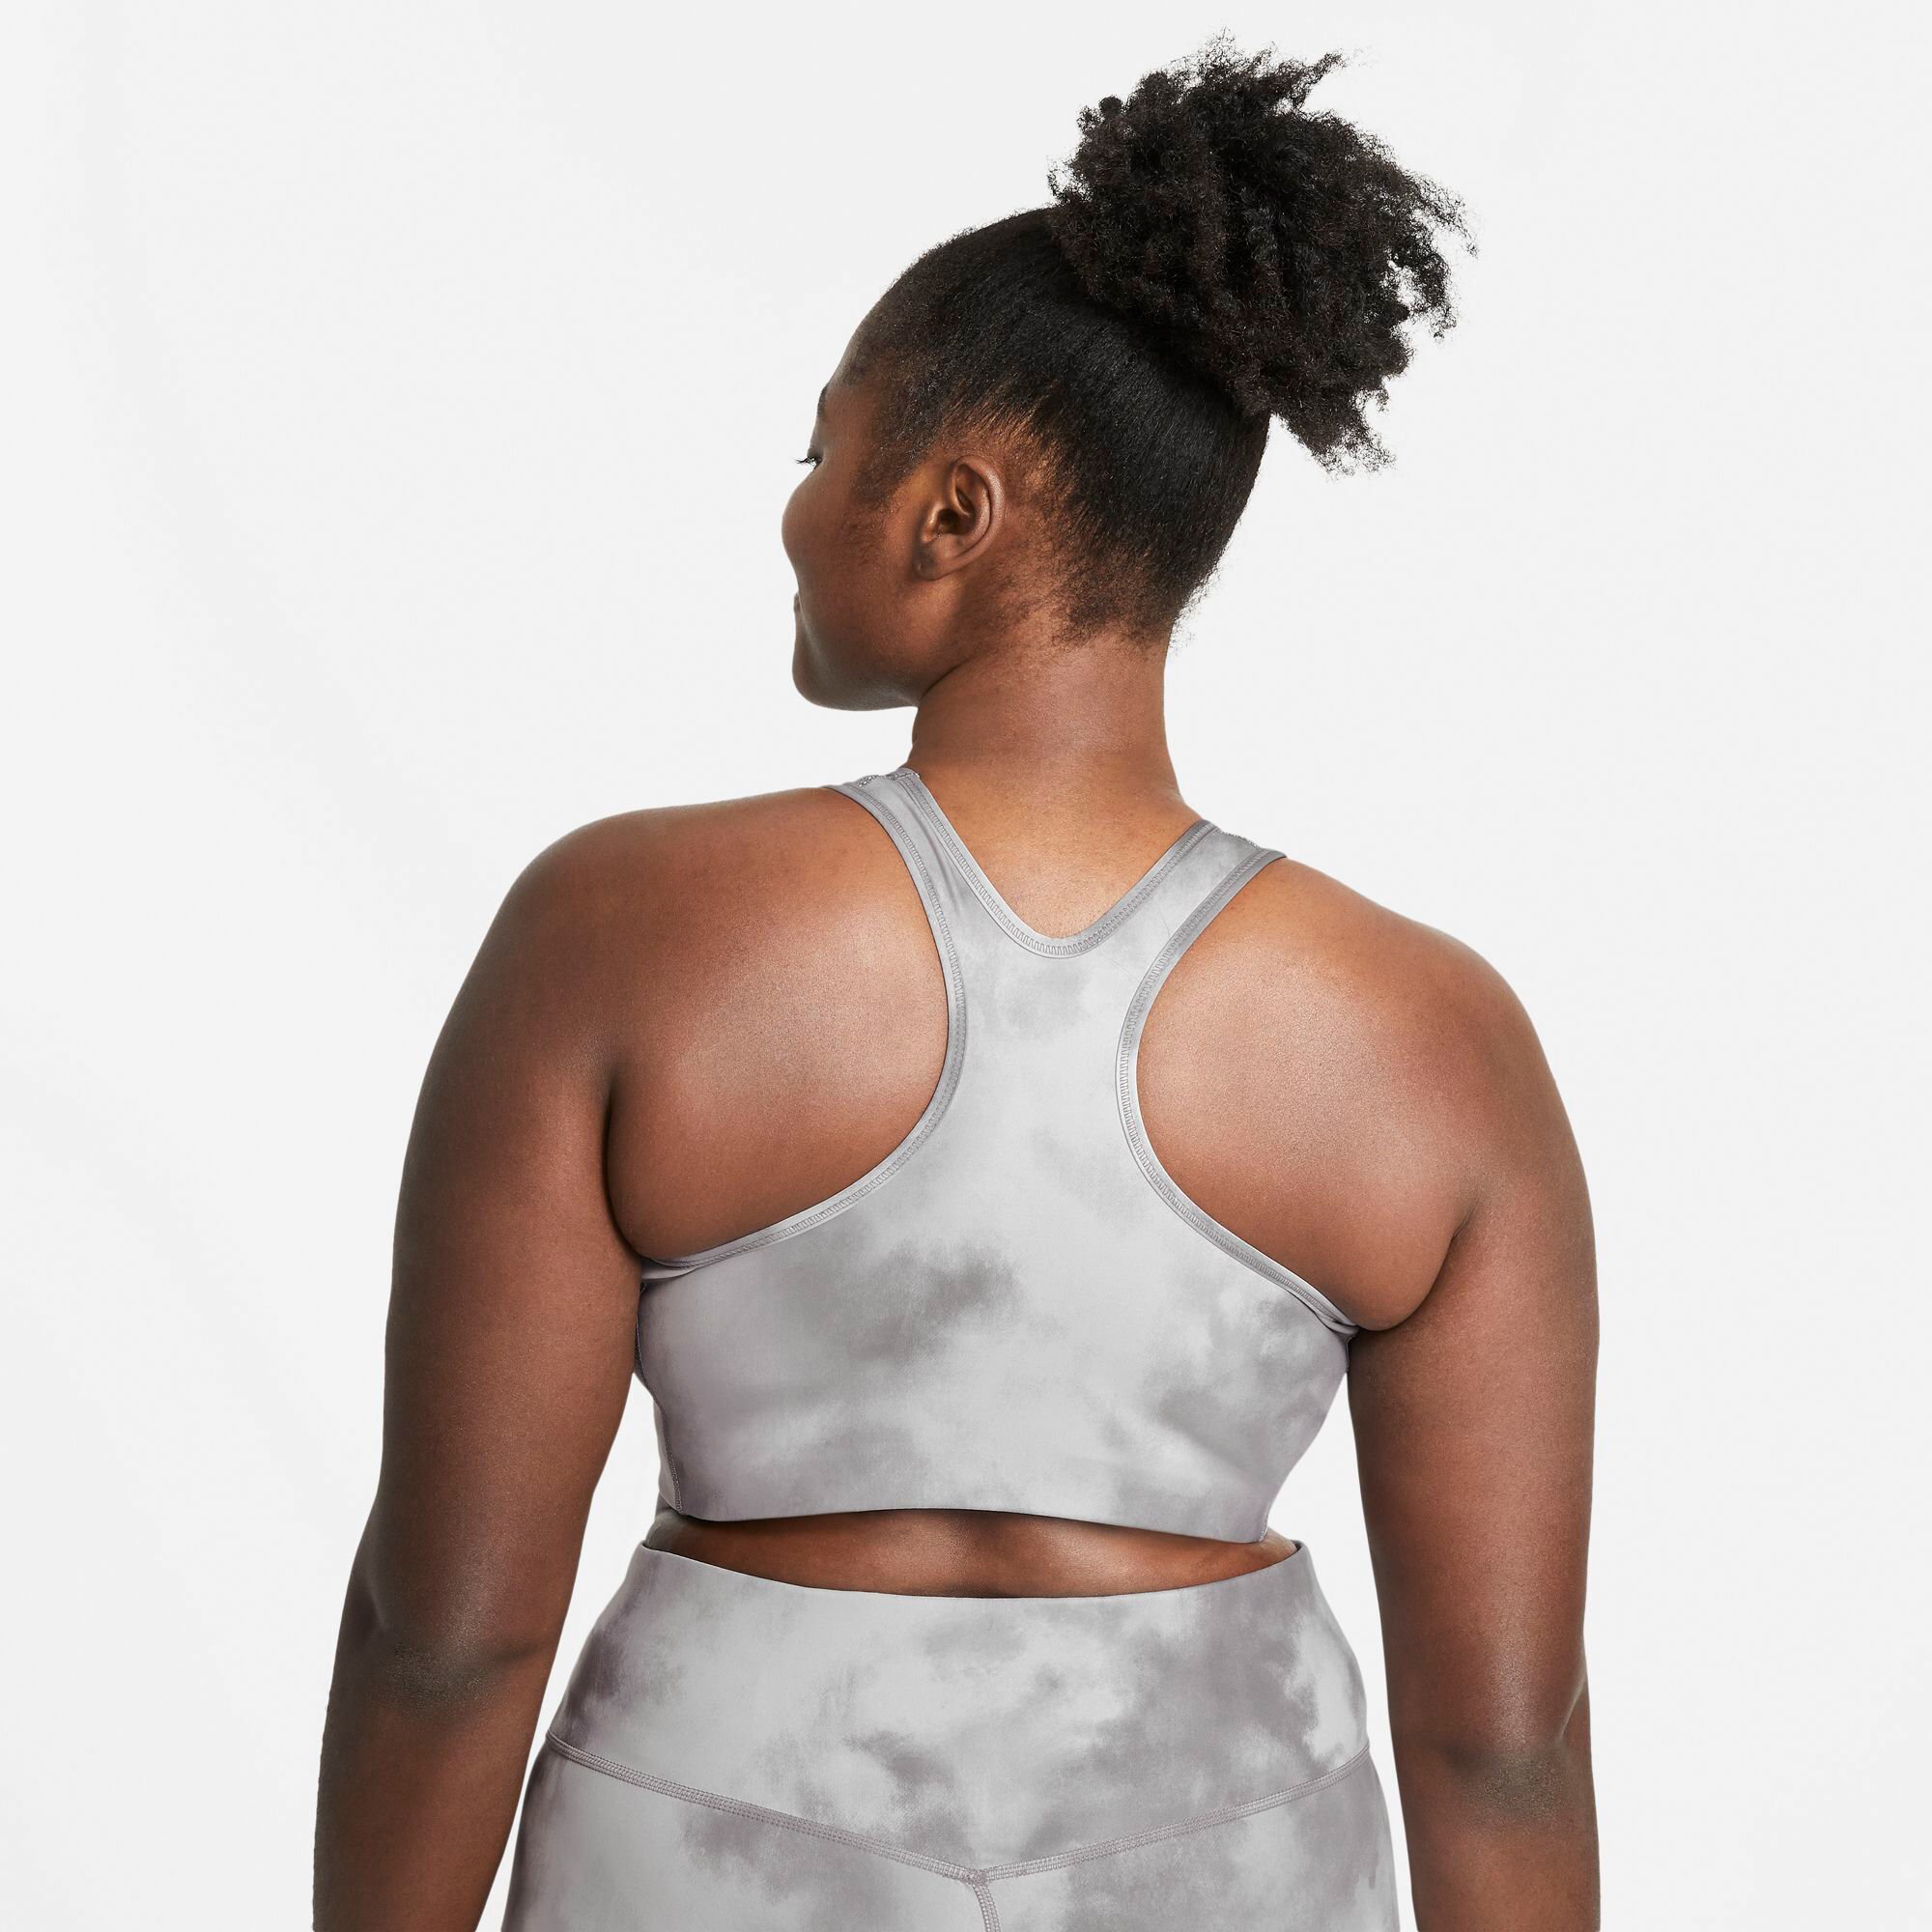 Nike + Women’s High Support Sports Bra (Plus Size) Nike Bold